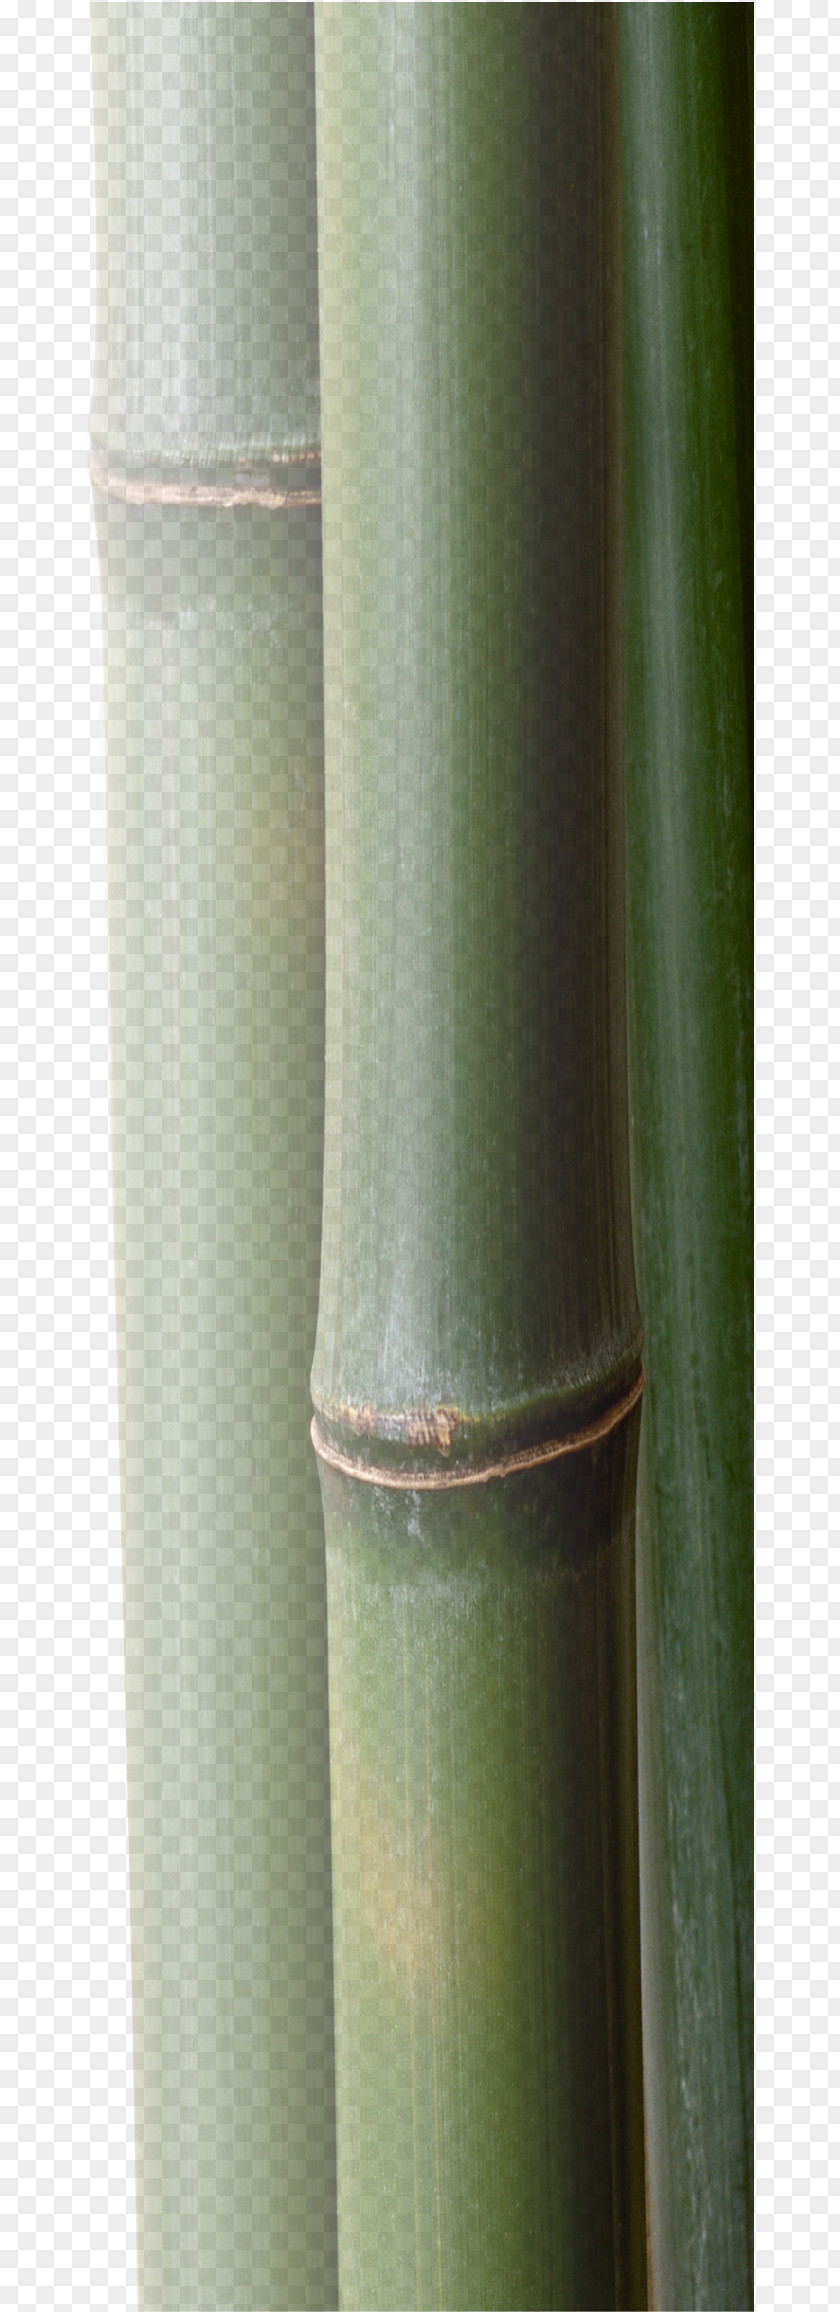 Bamboo Plant Stem Cylinder PNG